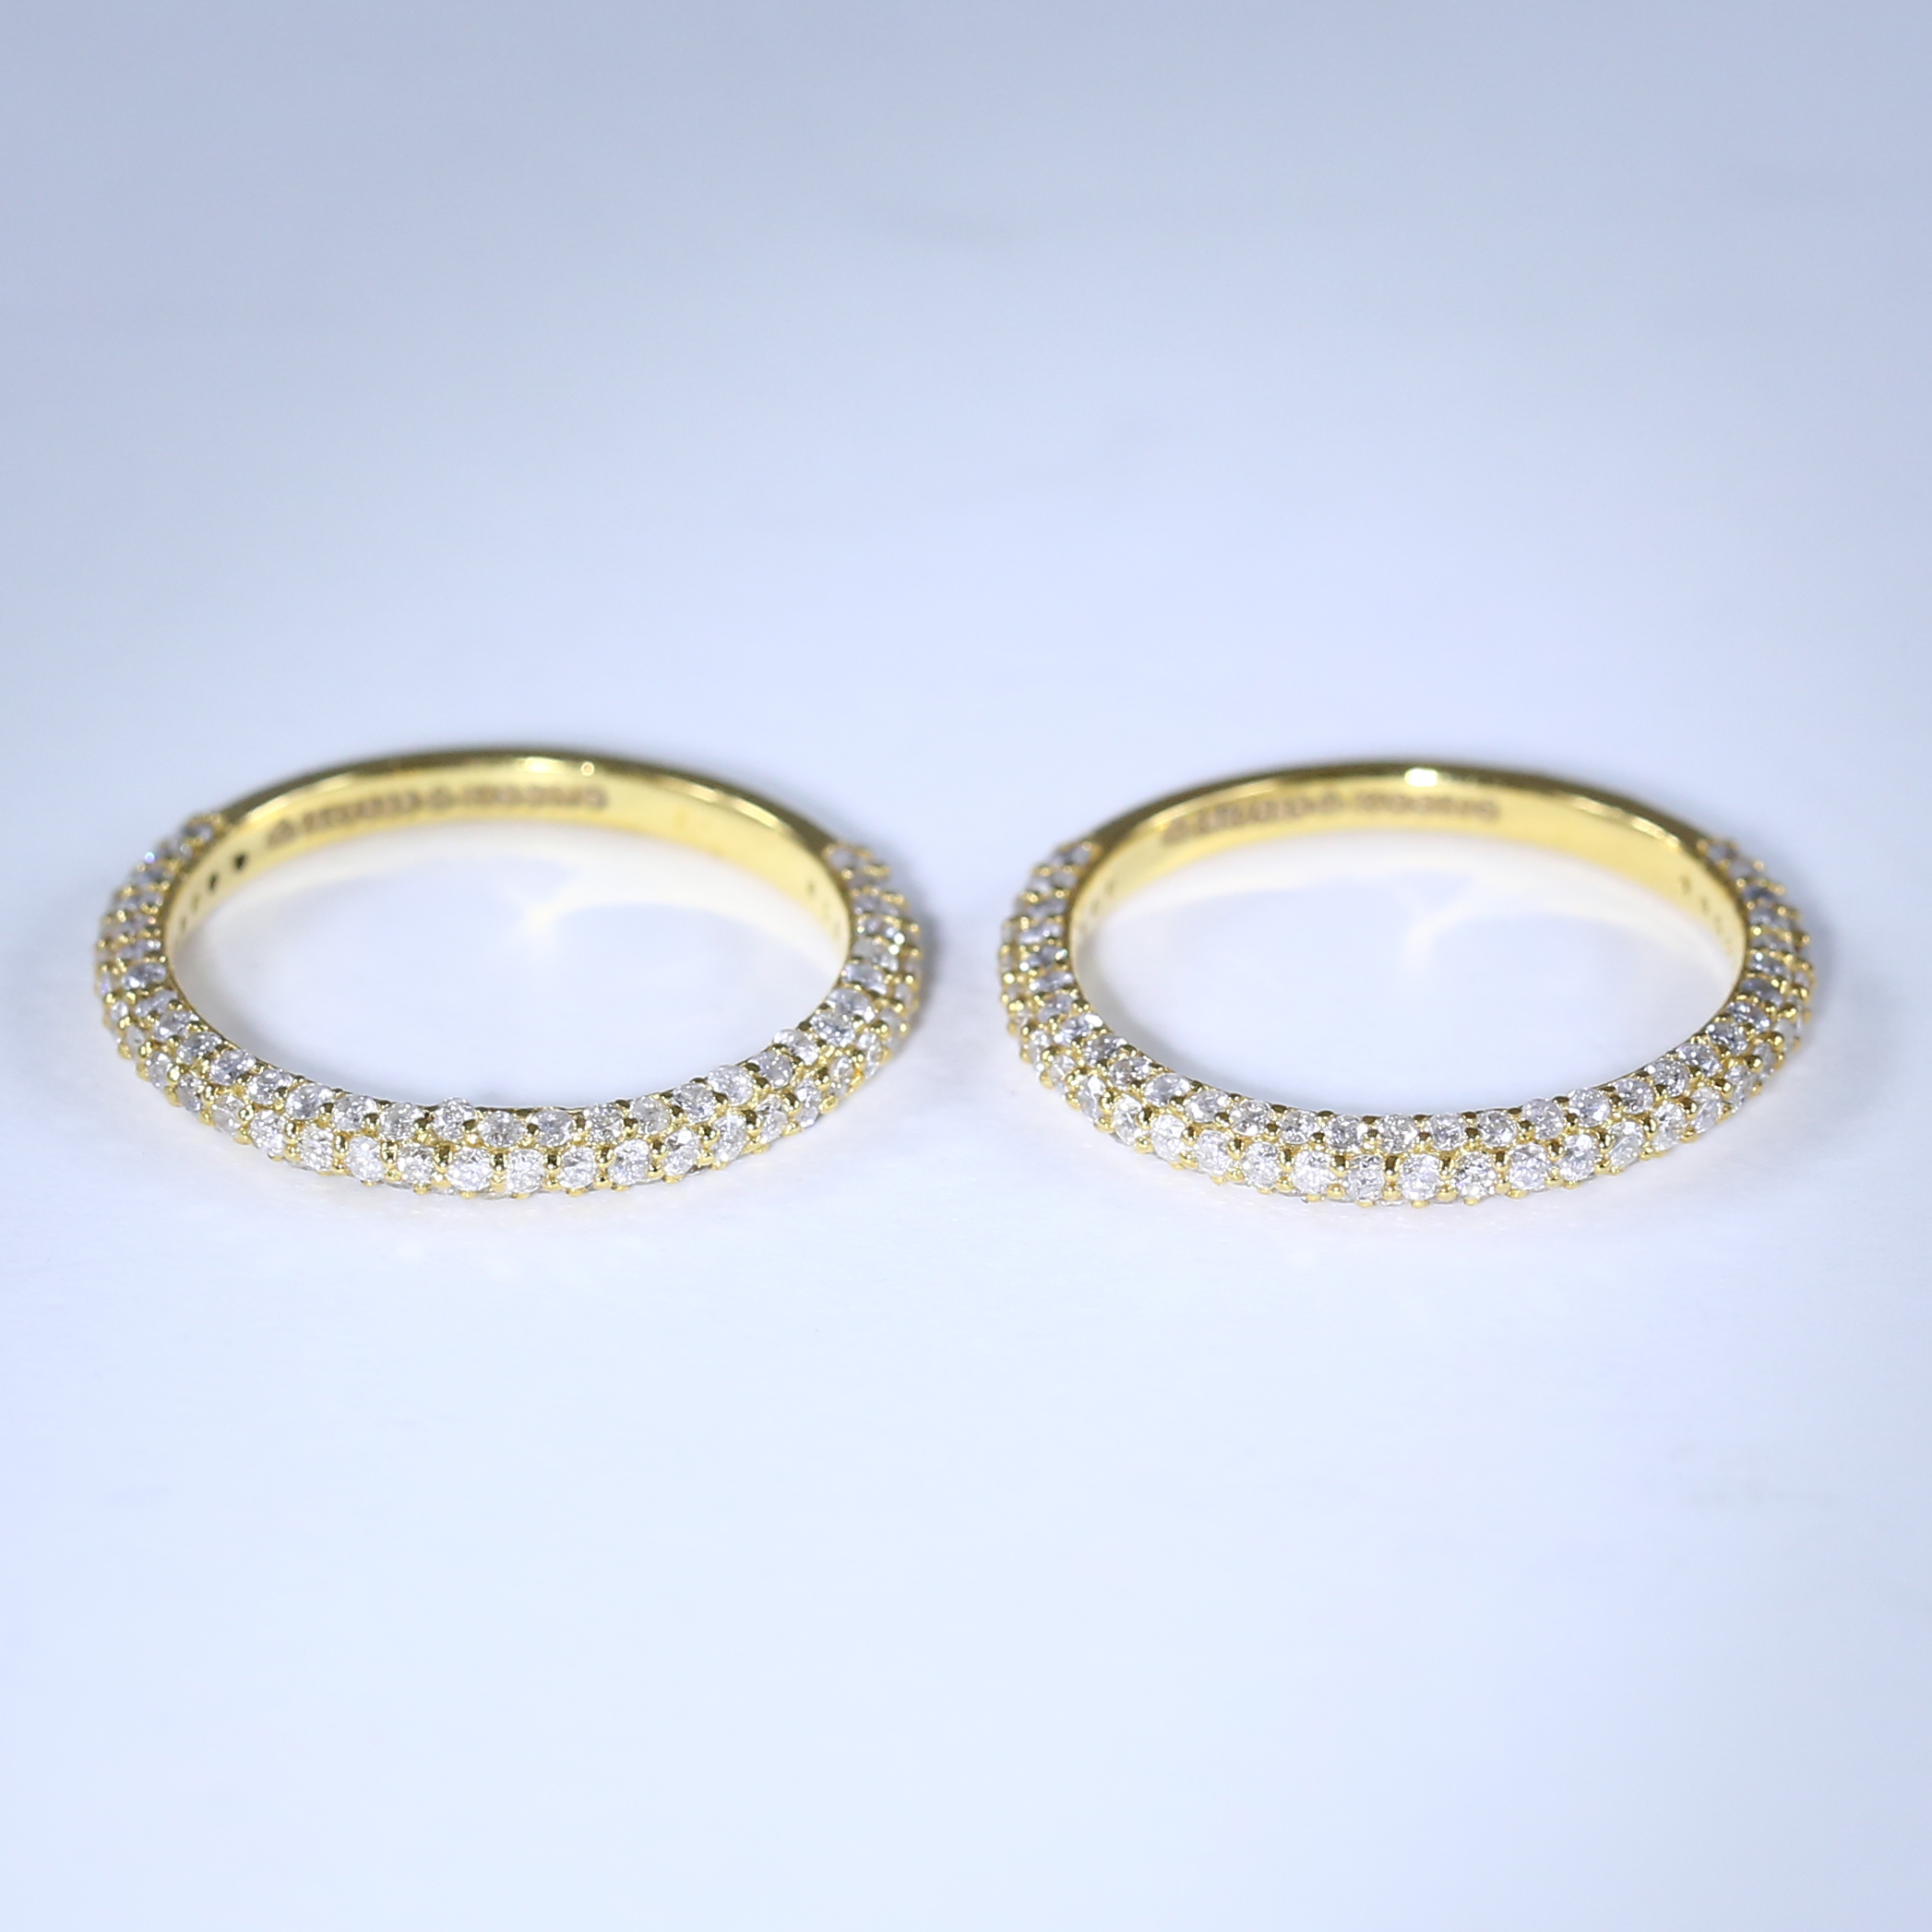 14 K / 585 Set of 2 Yellow Gold Engaement / Wedding Diamond Band Rings - Image 4 of 9